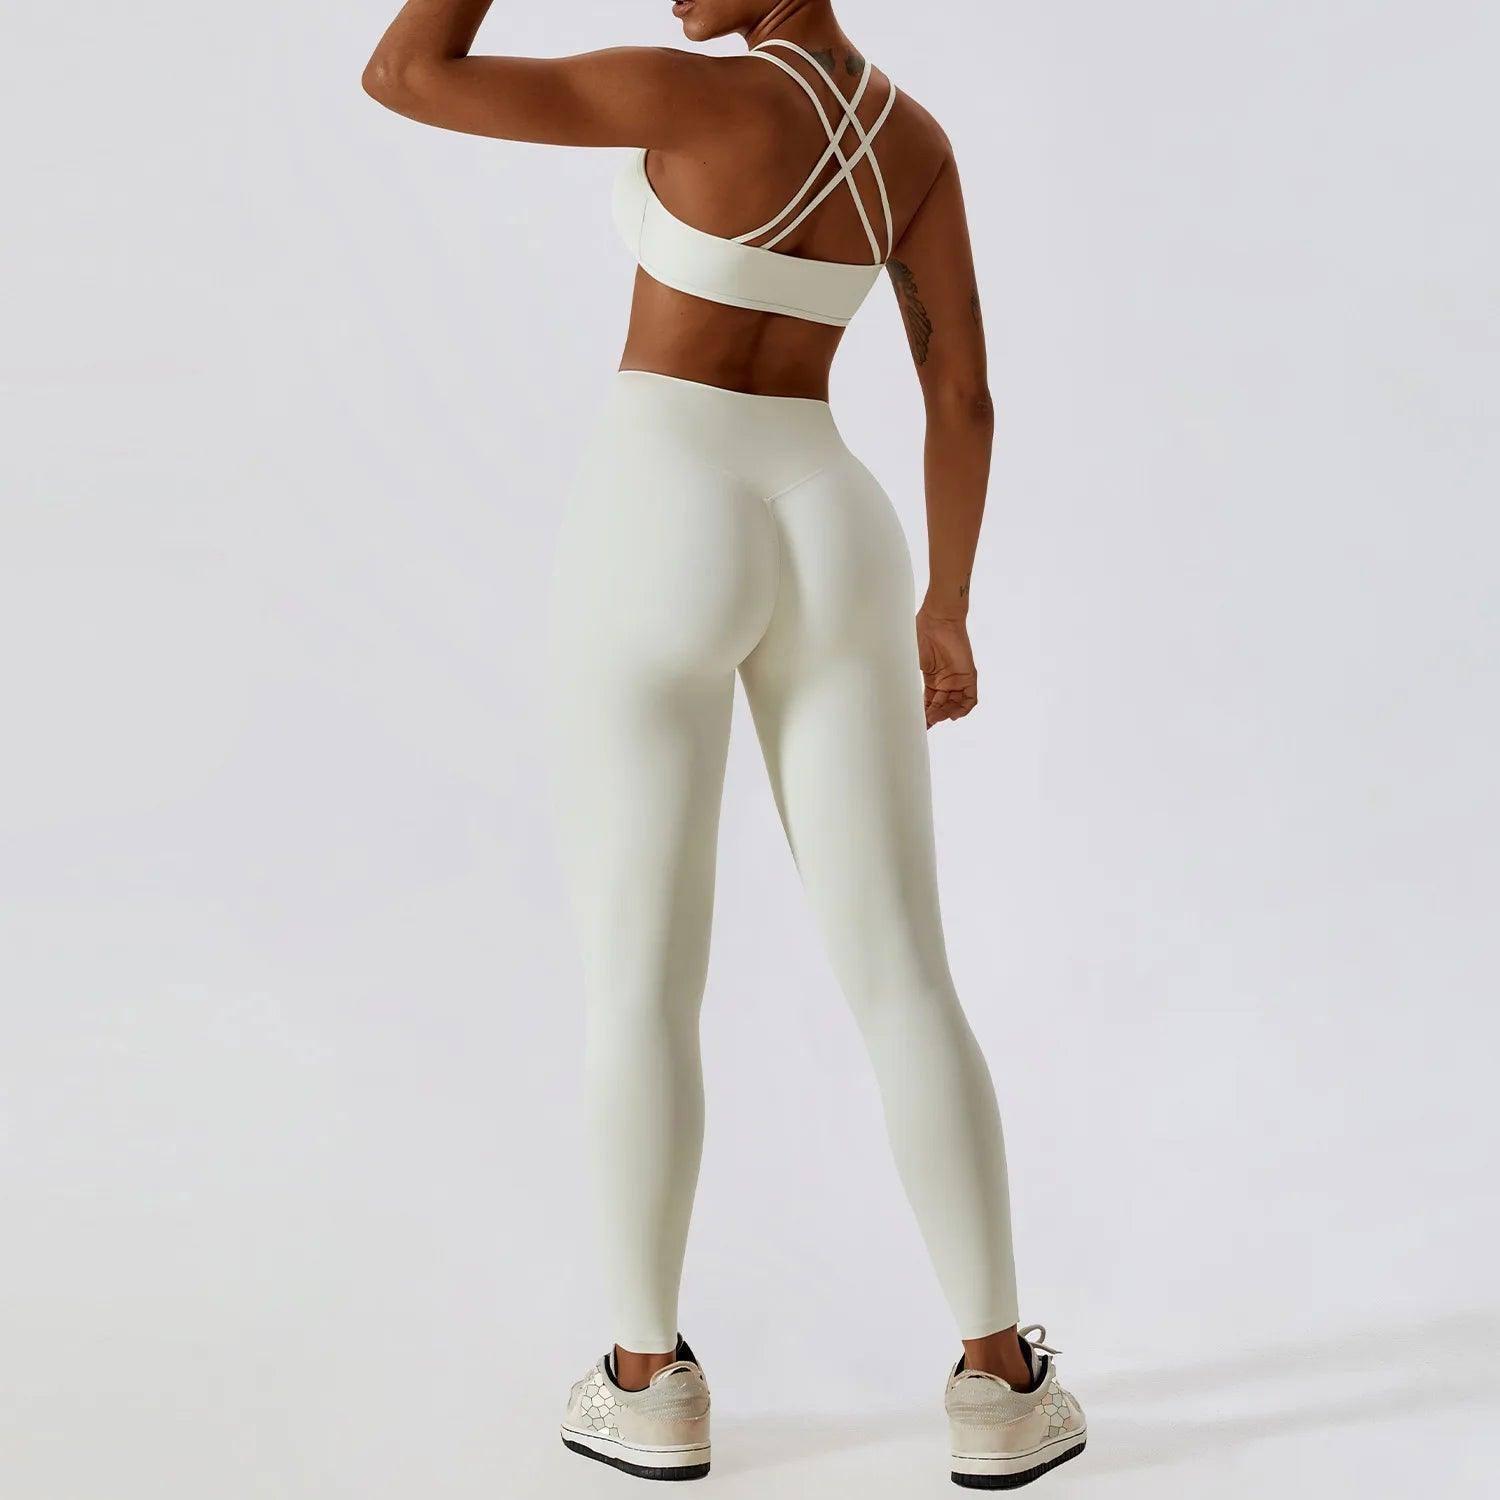 Yoga Clothing Sets Women Athletic Wear High Waist Leggings-Cream Apricot Set-1-1